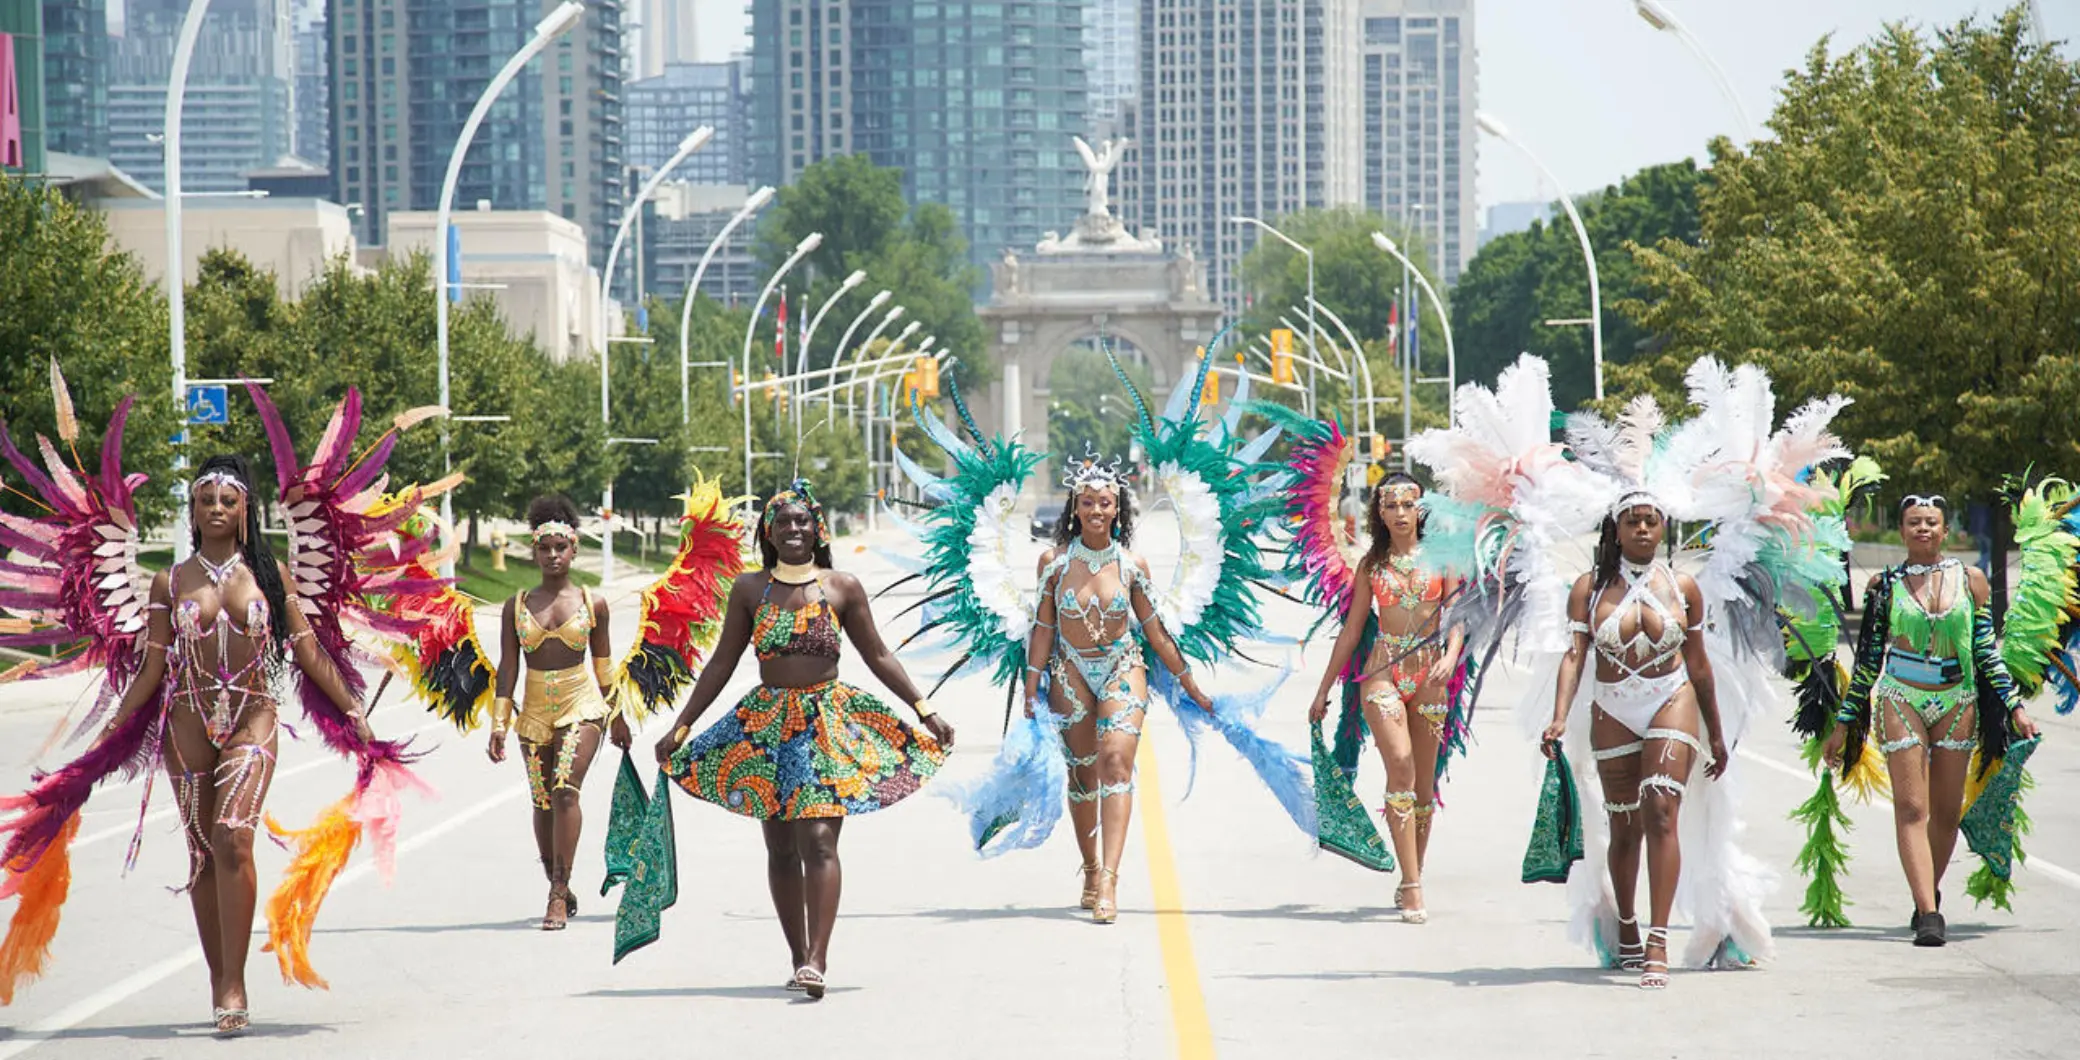 Caribana;Caribbean Carnival Parade and Festival in Toronto,Ontario